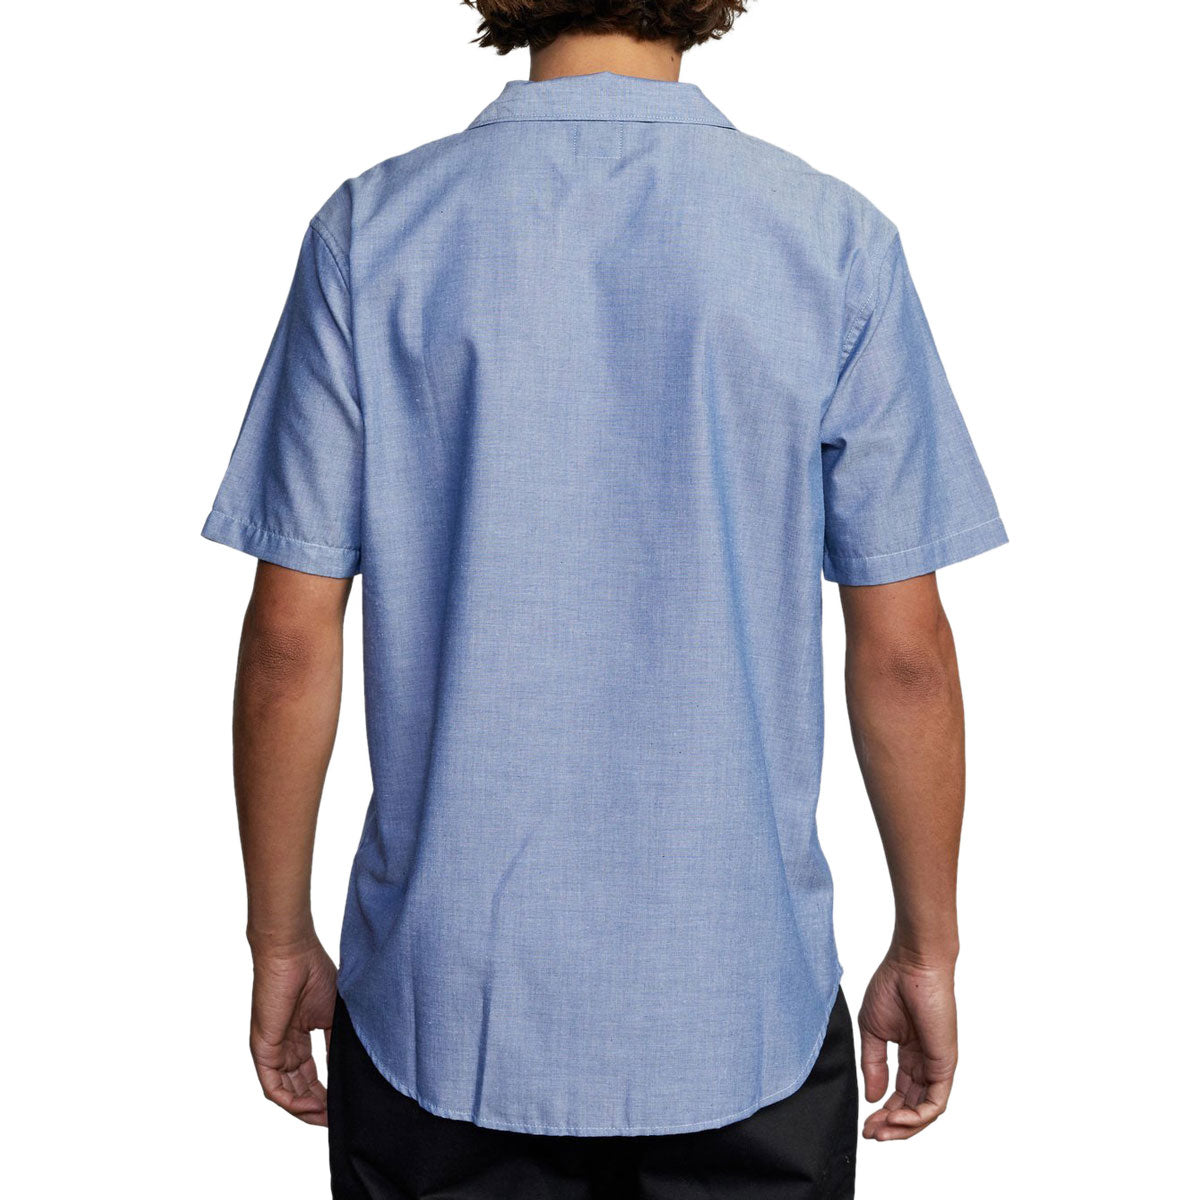 RVCA Day Shifts Shirt - Blue Chambray image 2